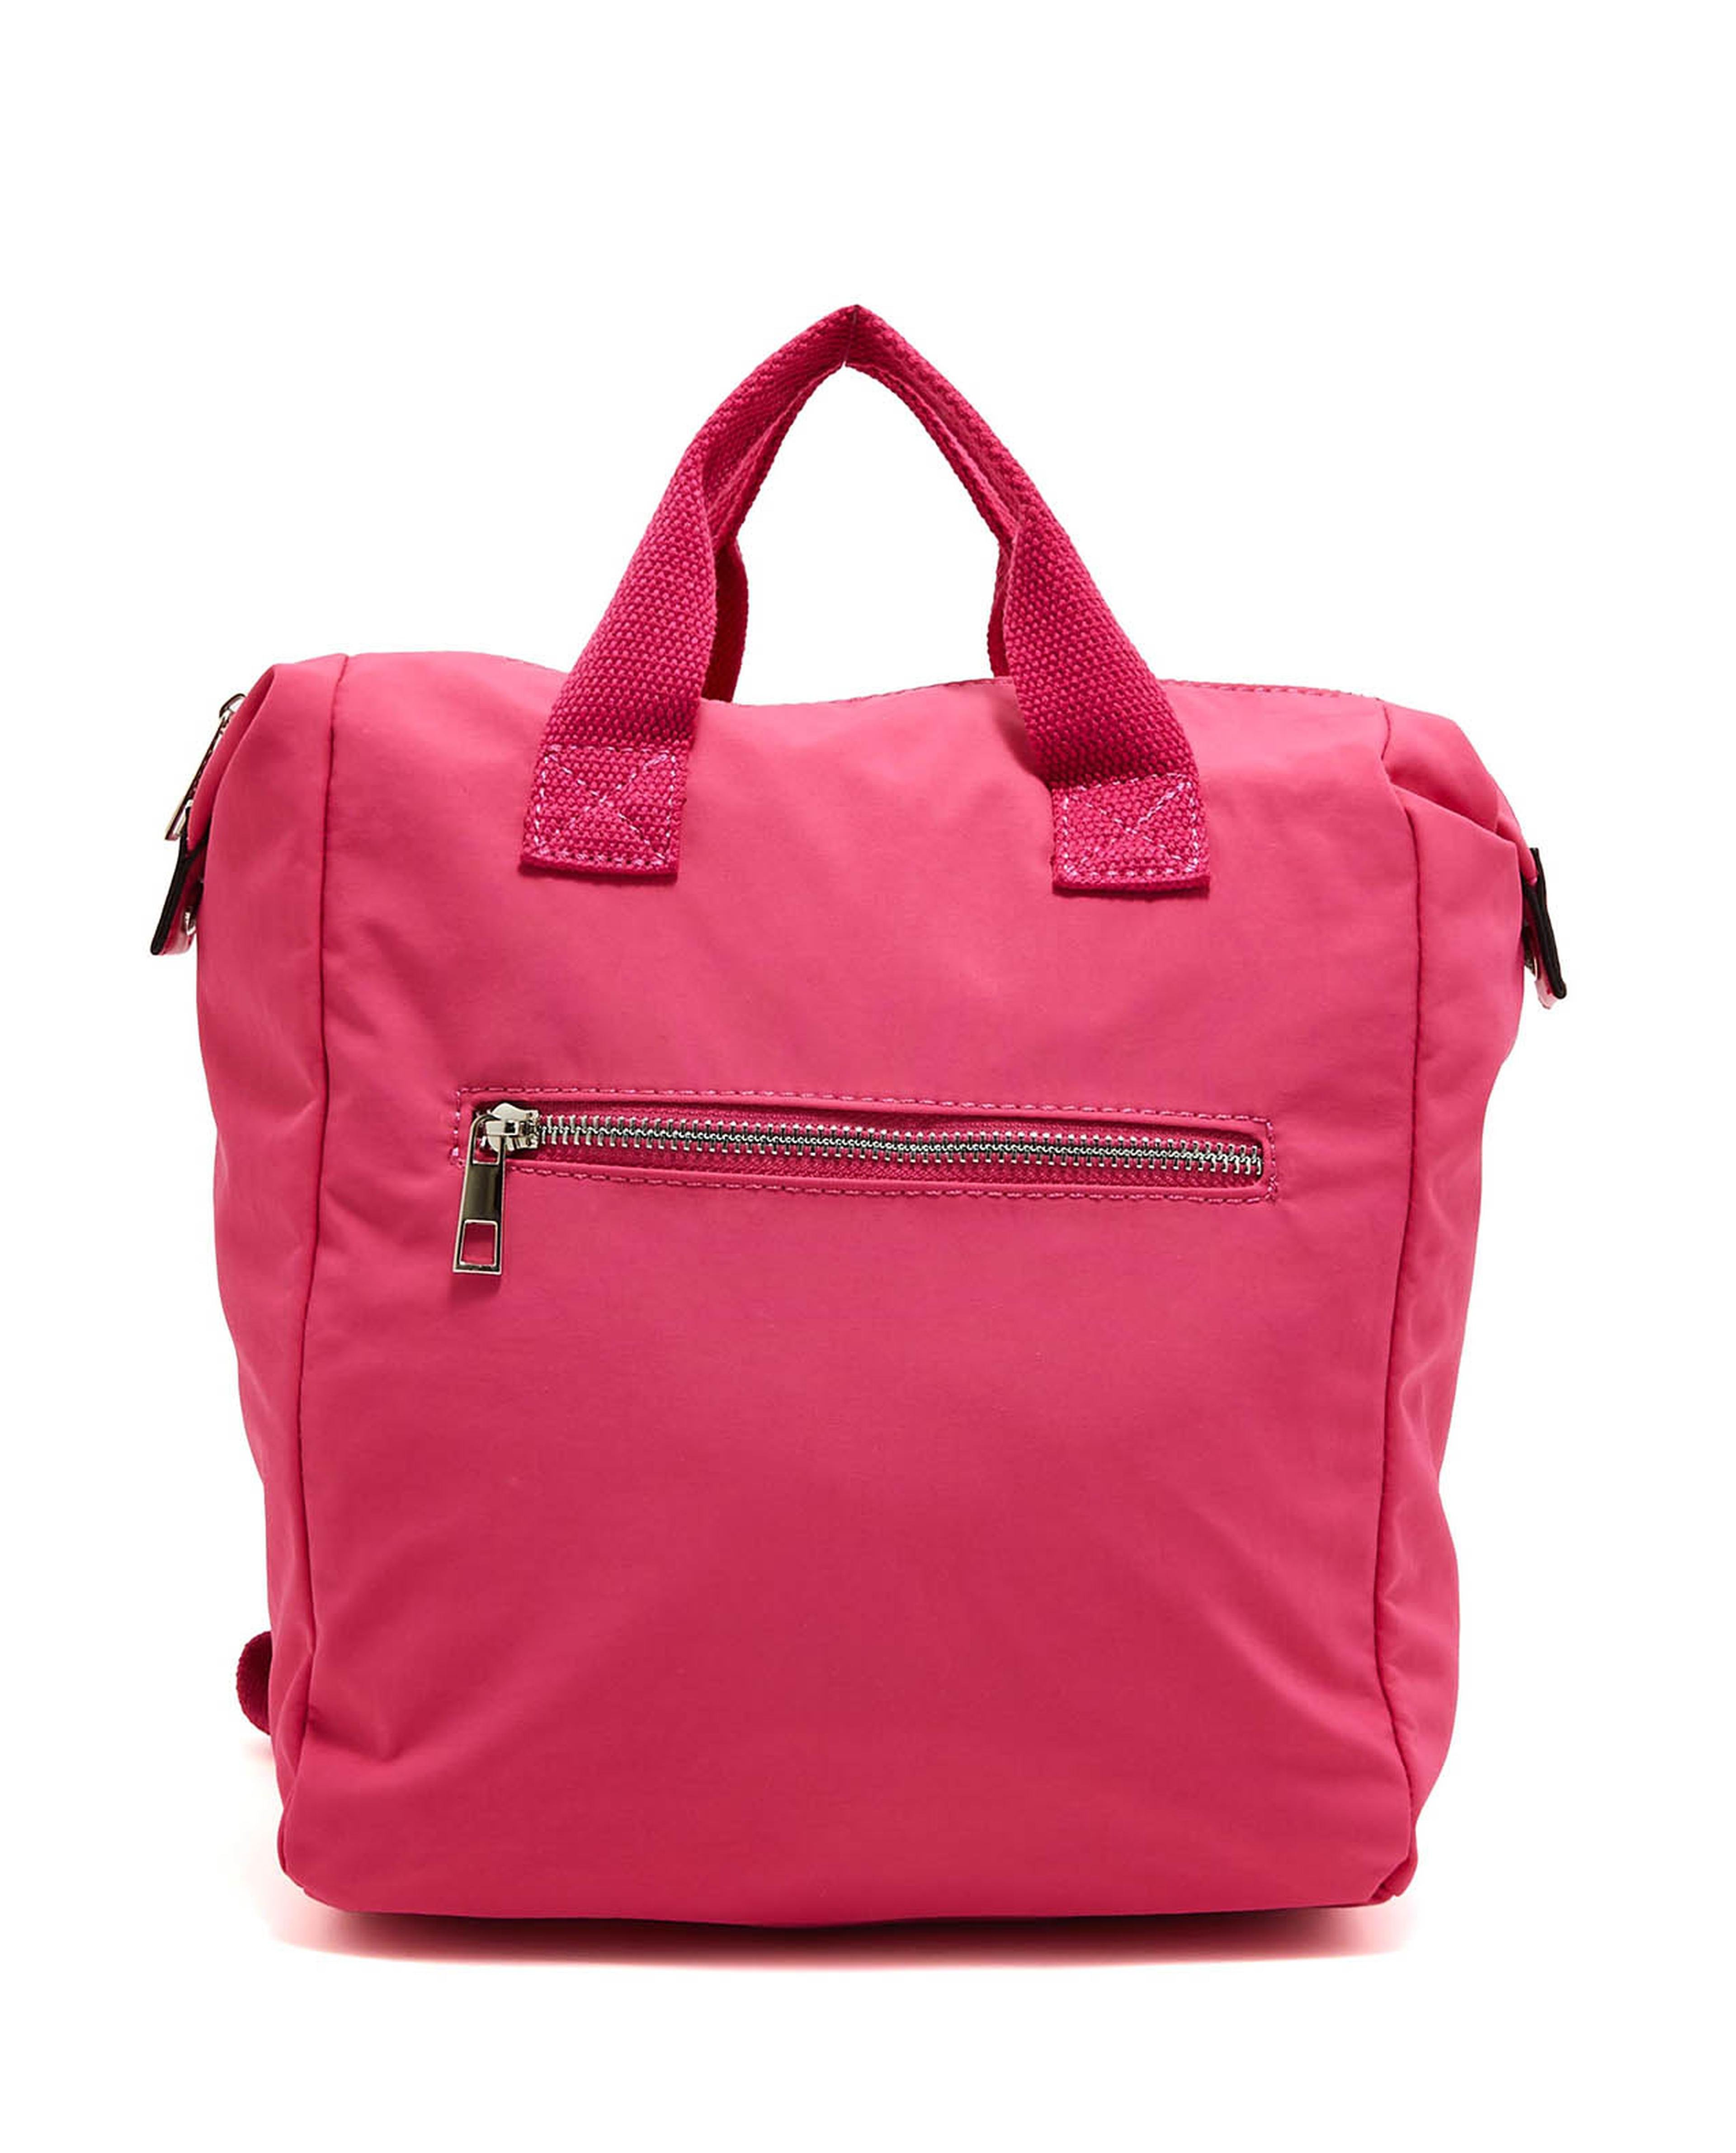 2-In-1 Top Handle Backpack